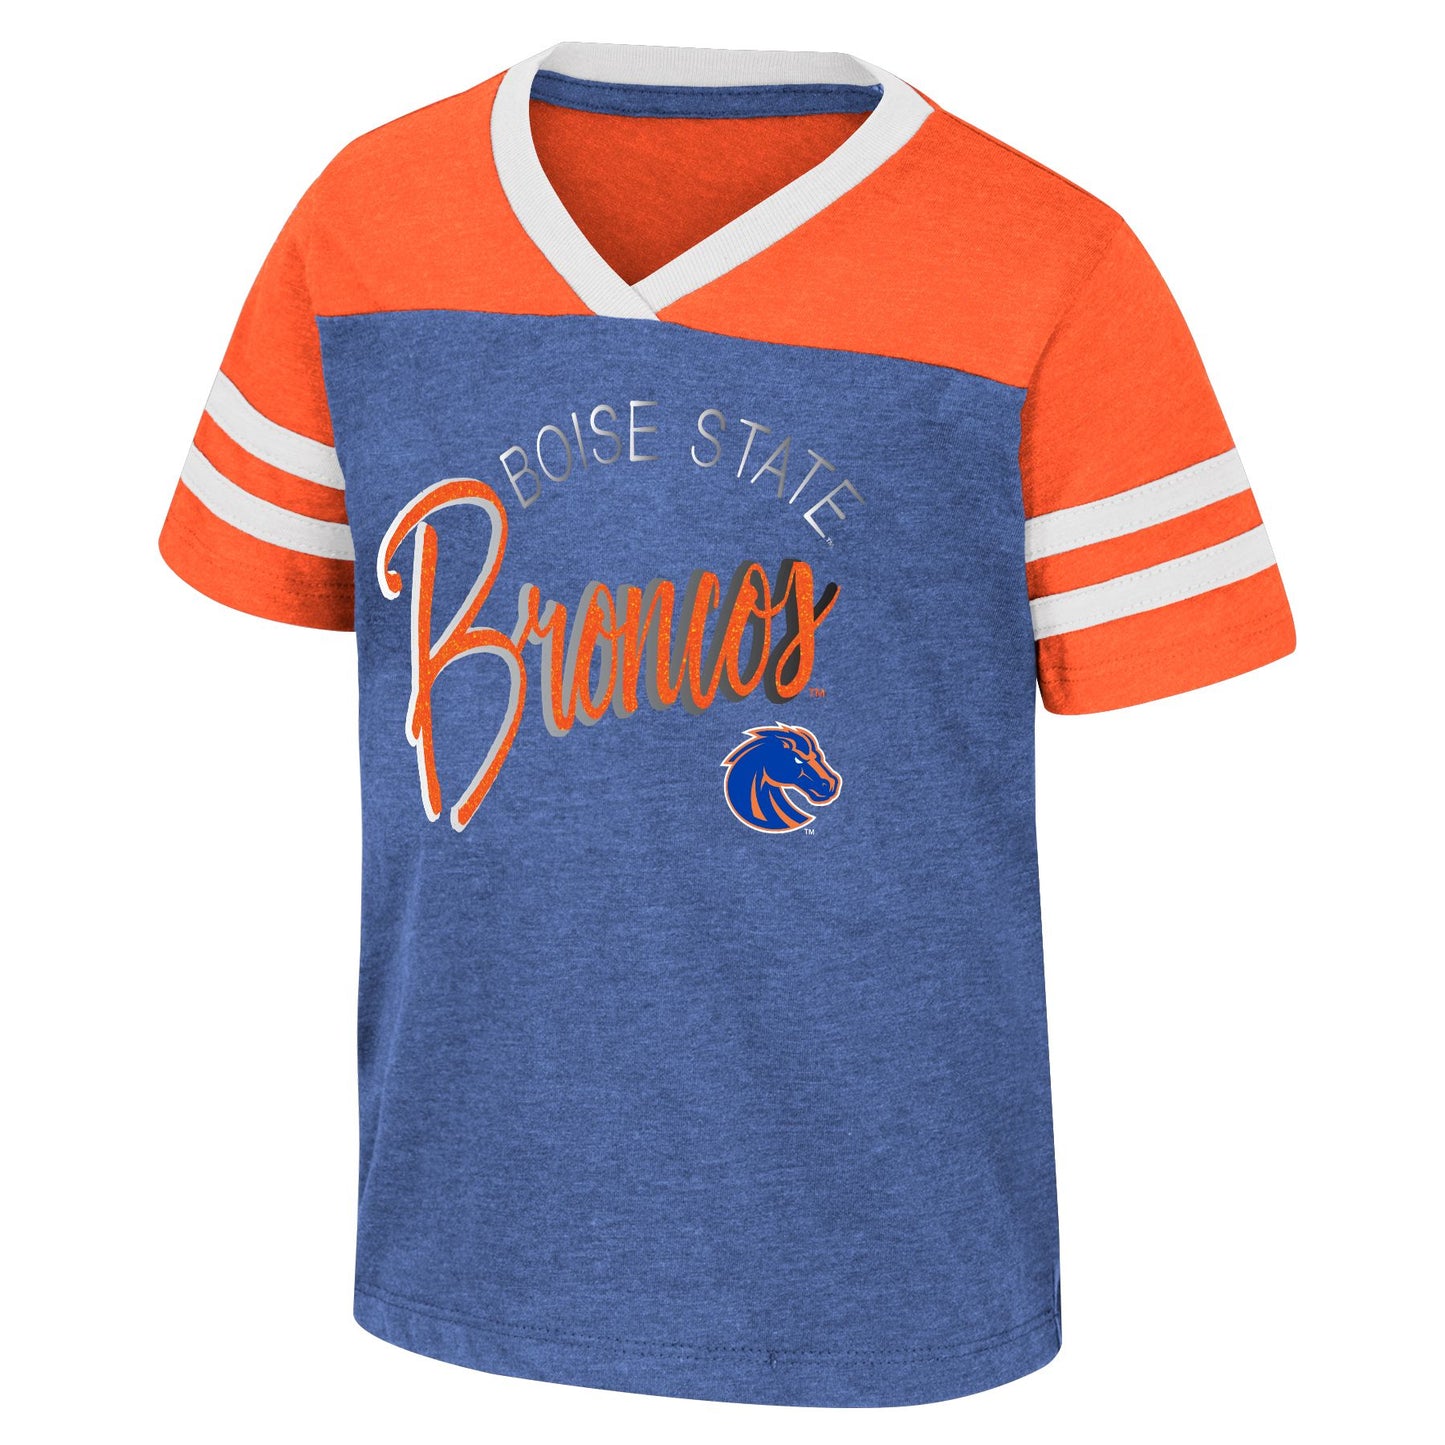 Boise State Broncos Colosseum Toddler V-Neck T-Shirt (Blue/Orange)